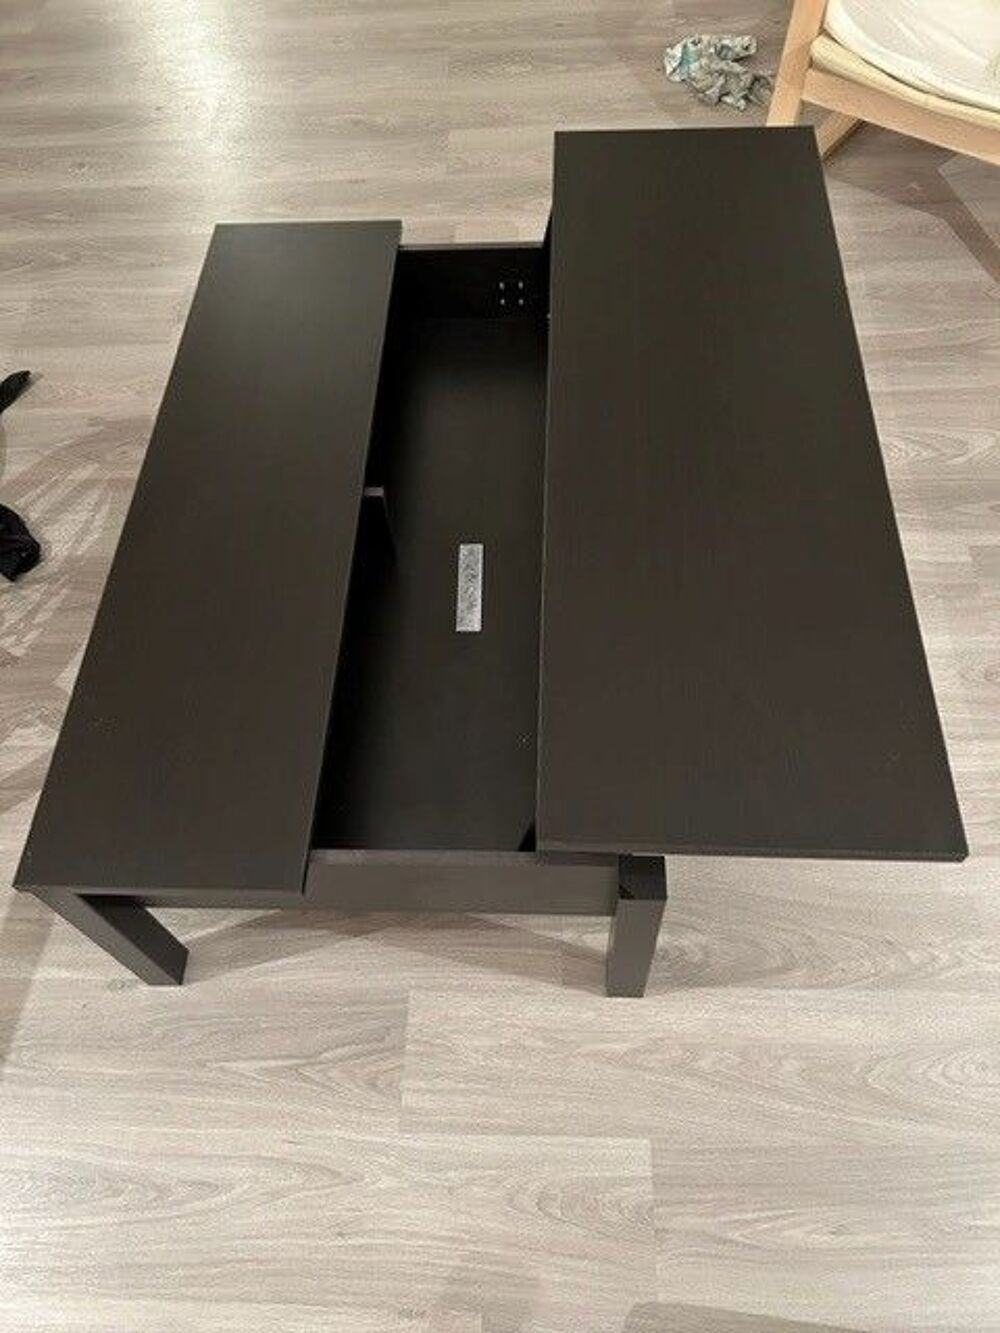 TABLE BASSE IKEA TRULSTORP
Meubles